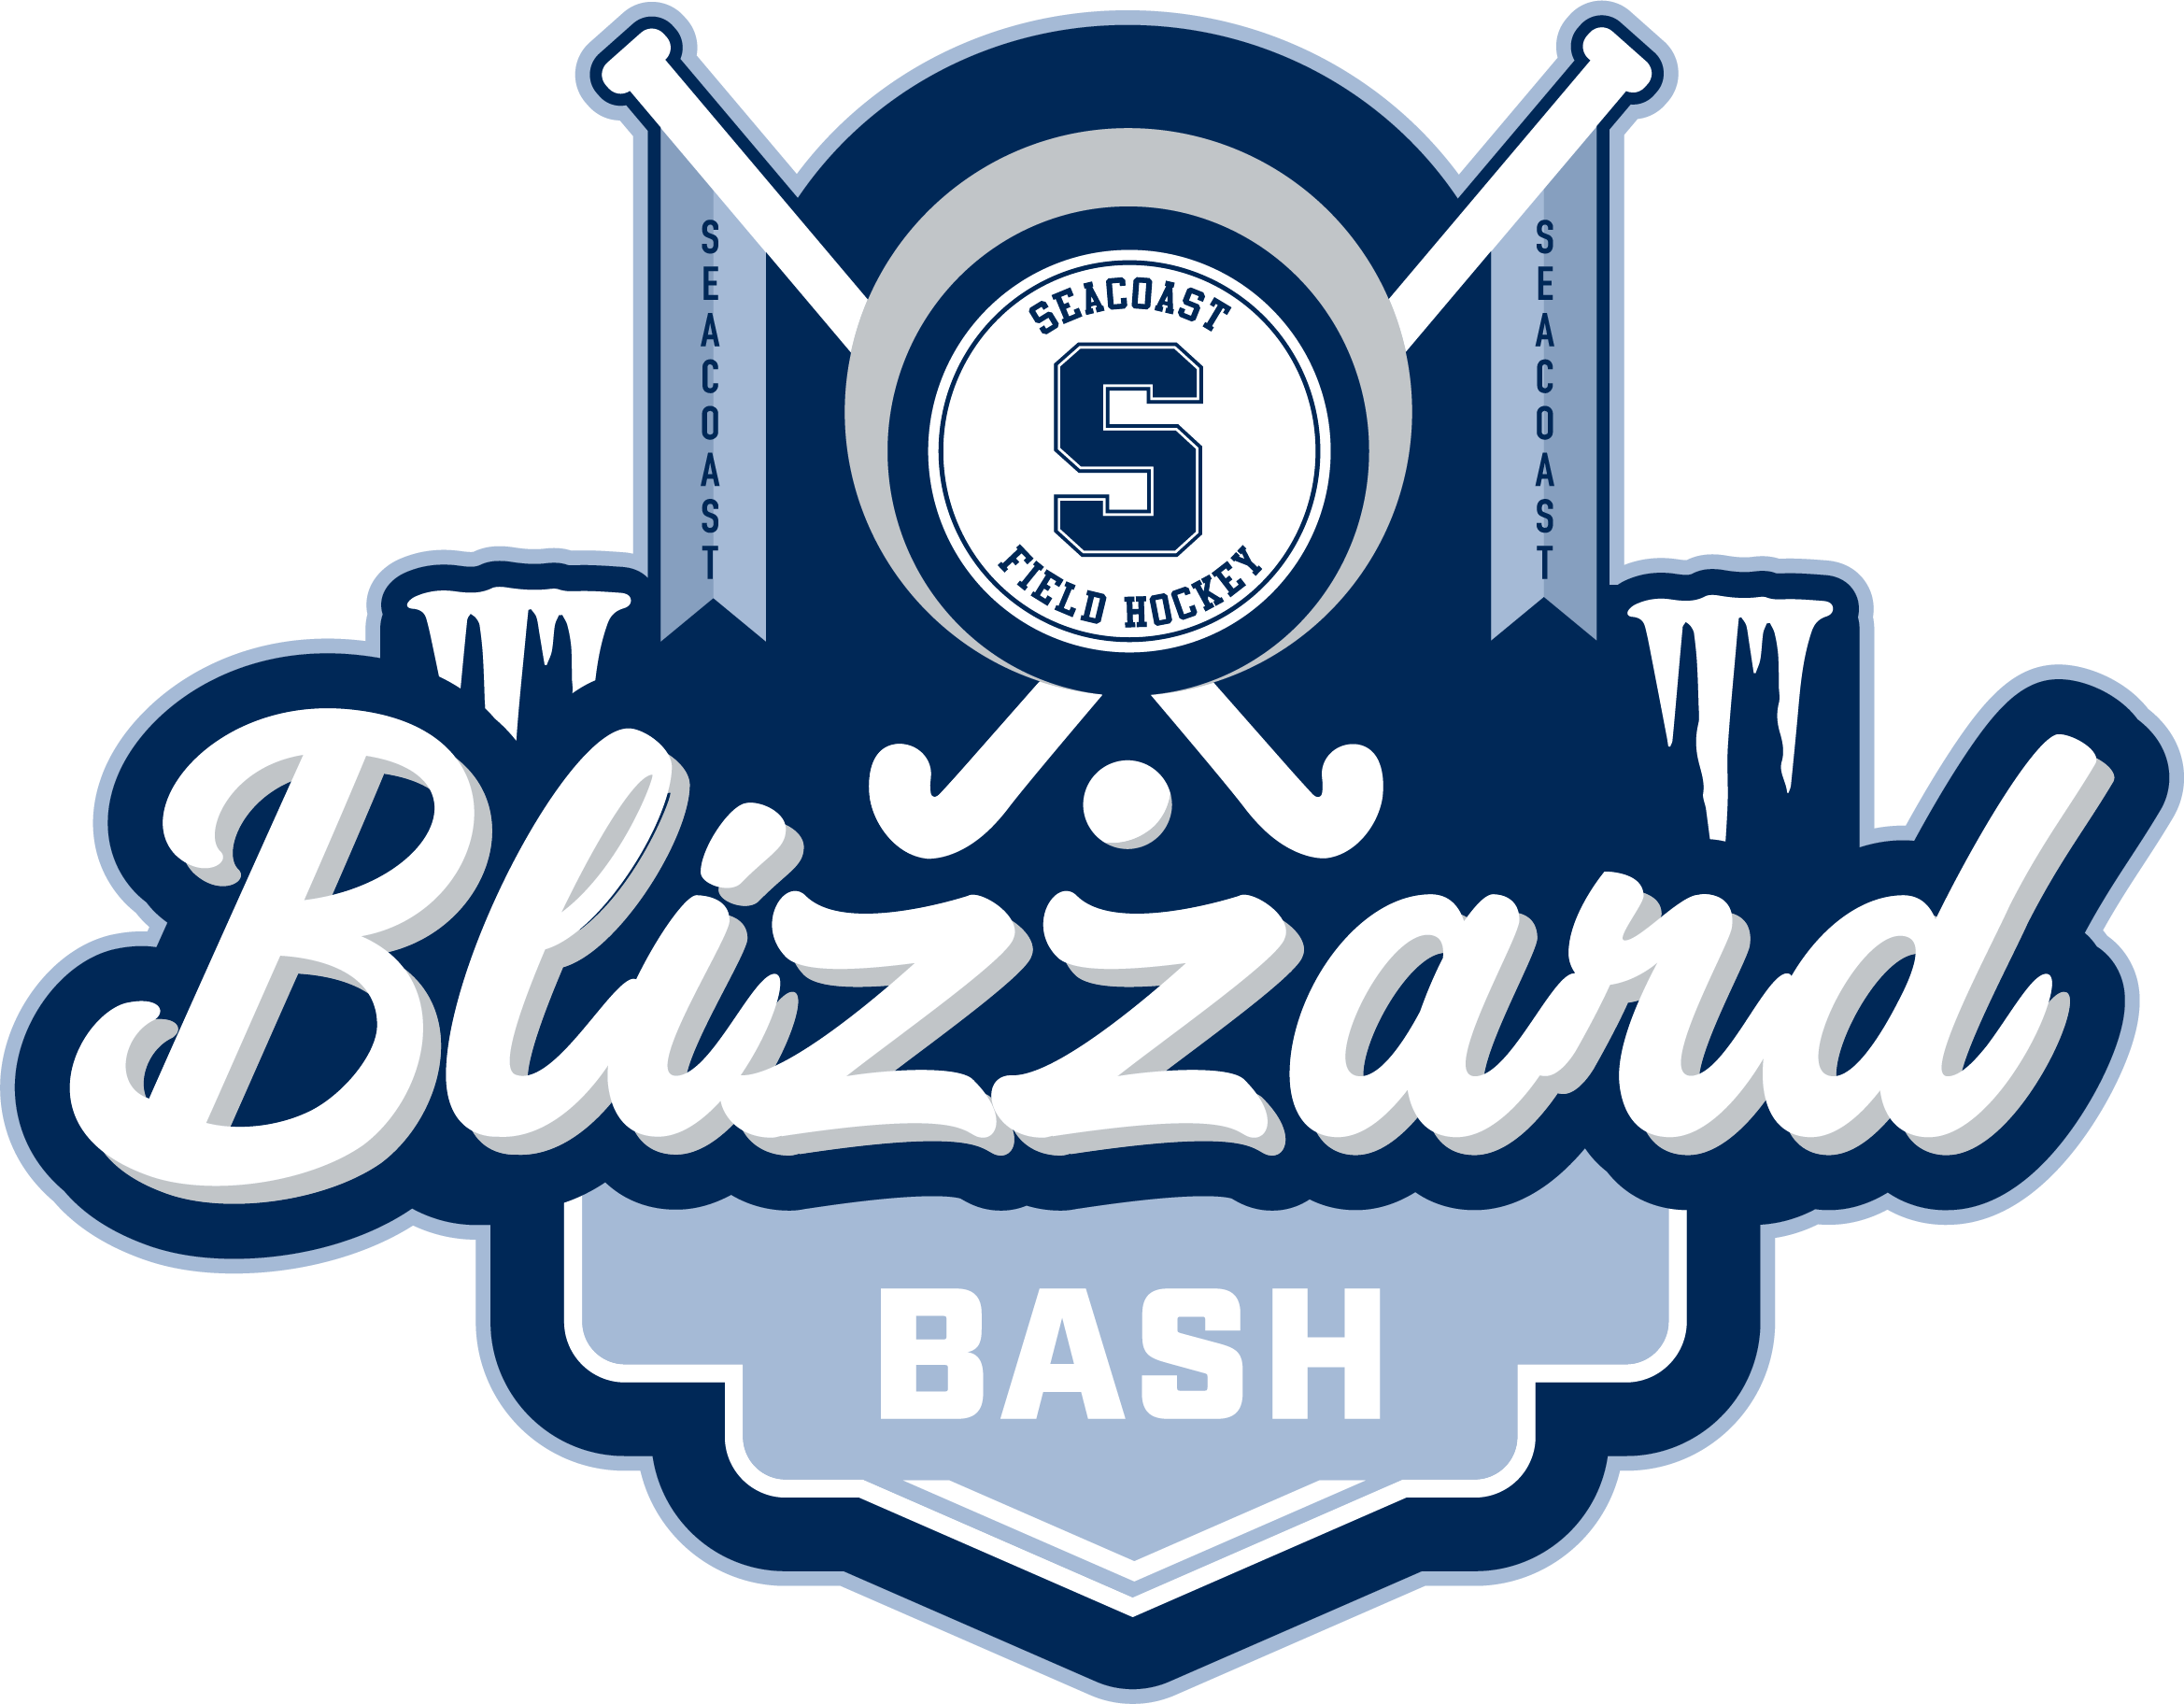 Blizzard-Bash-1